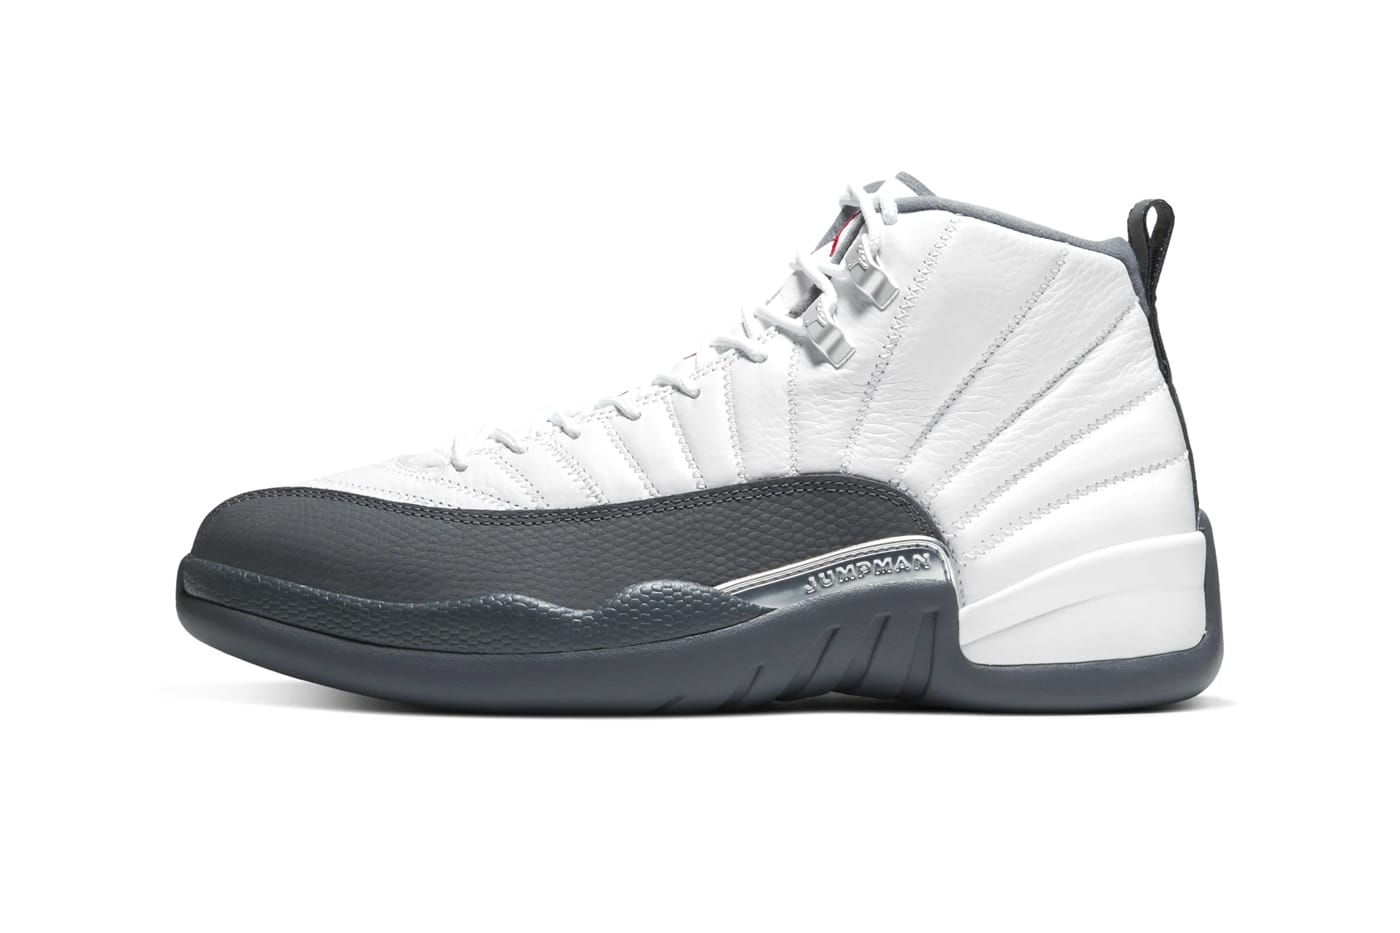 michael jordan grey shoes